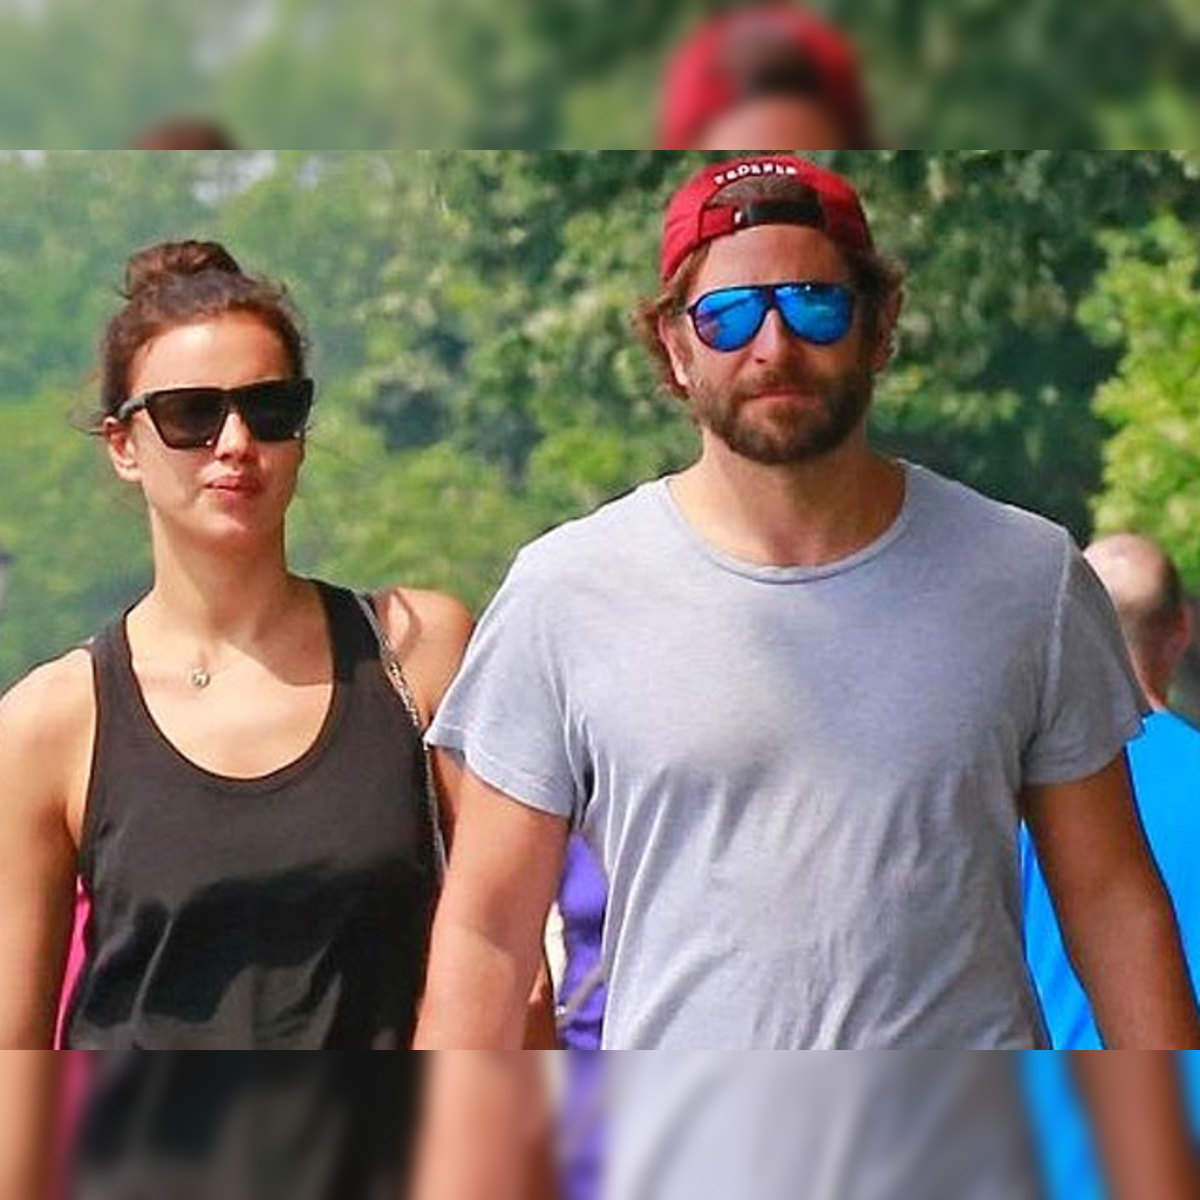 8 Facts About Bradley Cooper and Girlfriend Irina Shayk